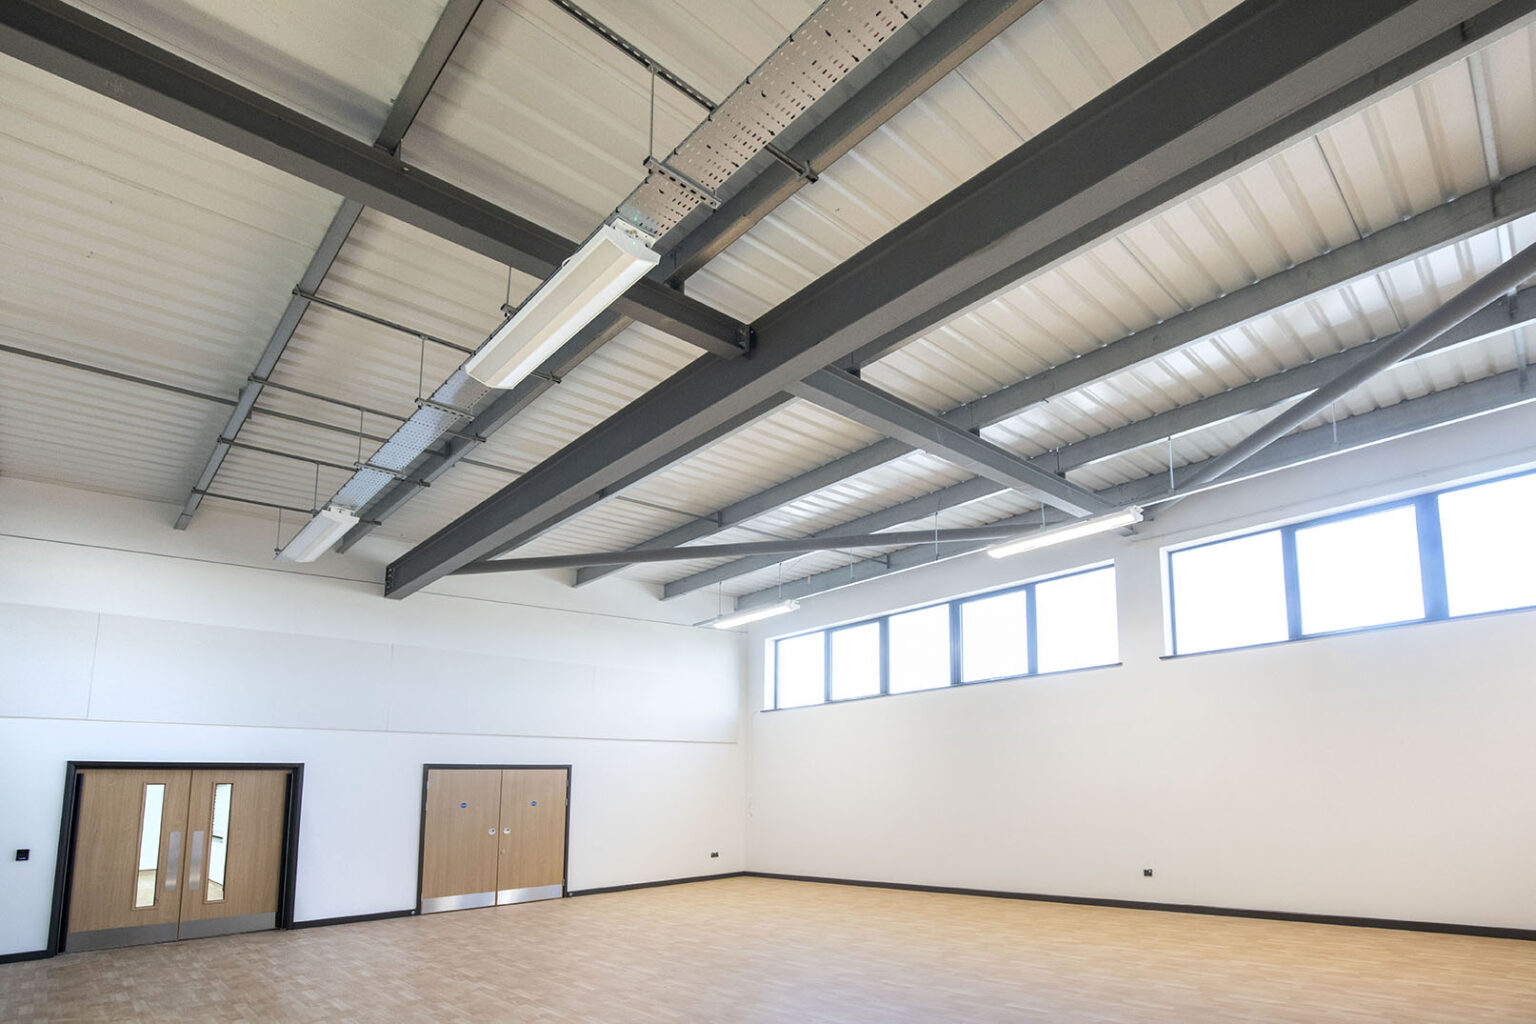 Indoor gymnasium at Churchward SEN School